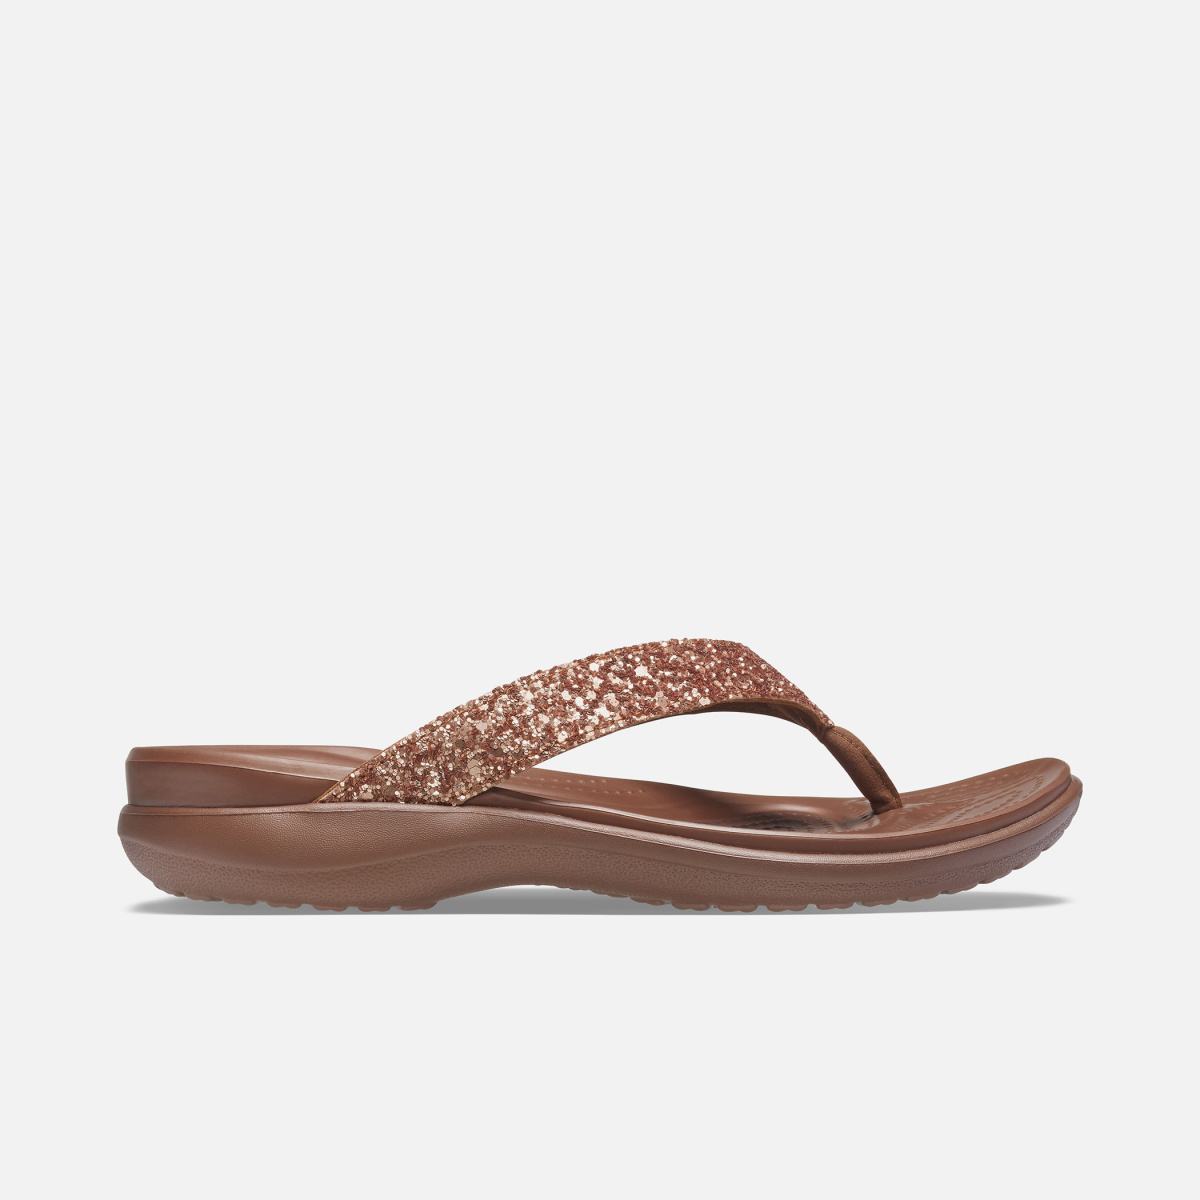 Crocs Capri Womens Sandals Flip Flops Black Size 6 Dual Comfort | eBay-hkpdtq2012.edu.vn